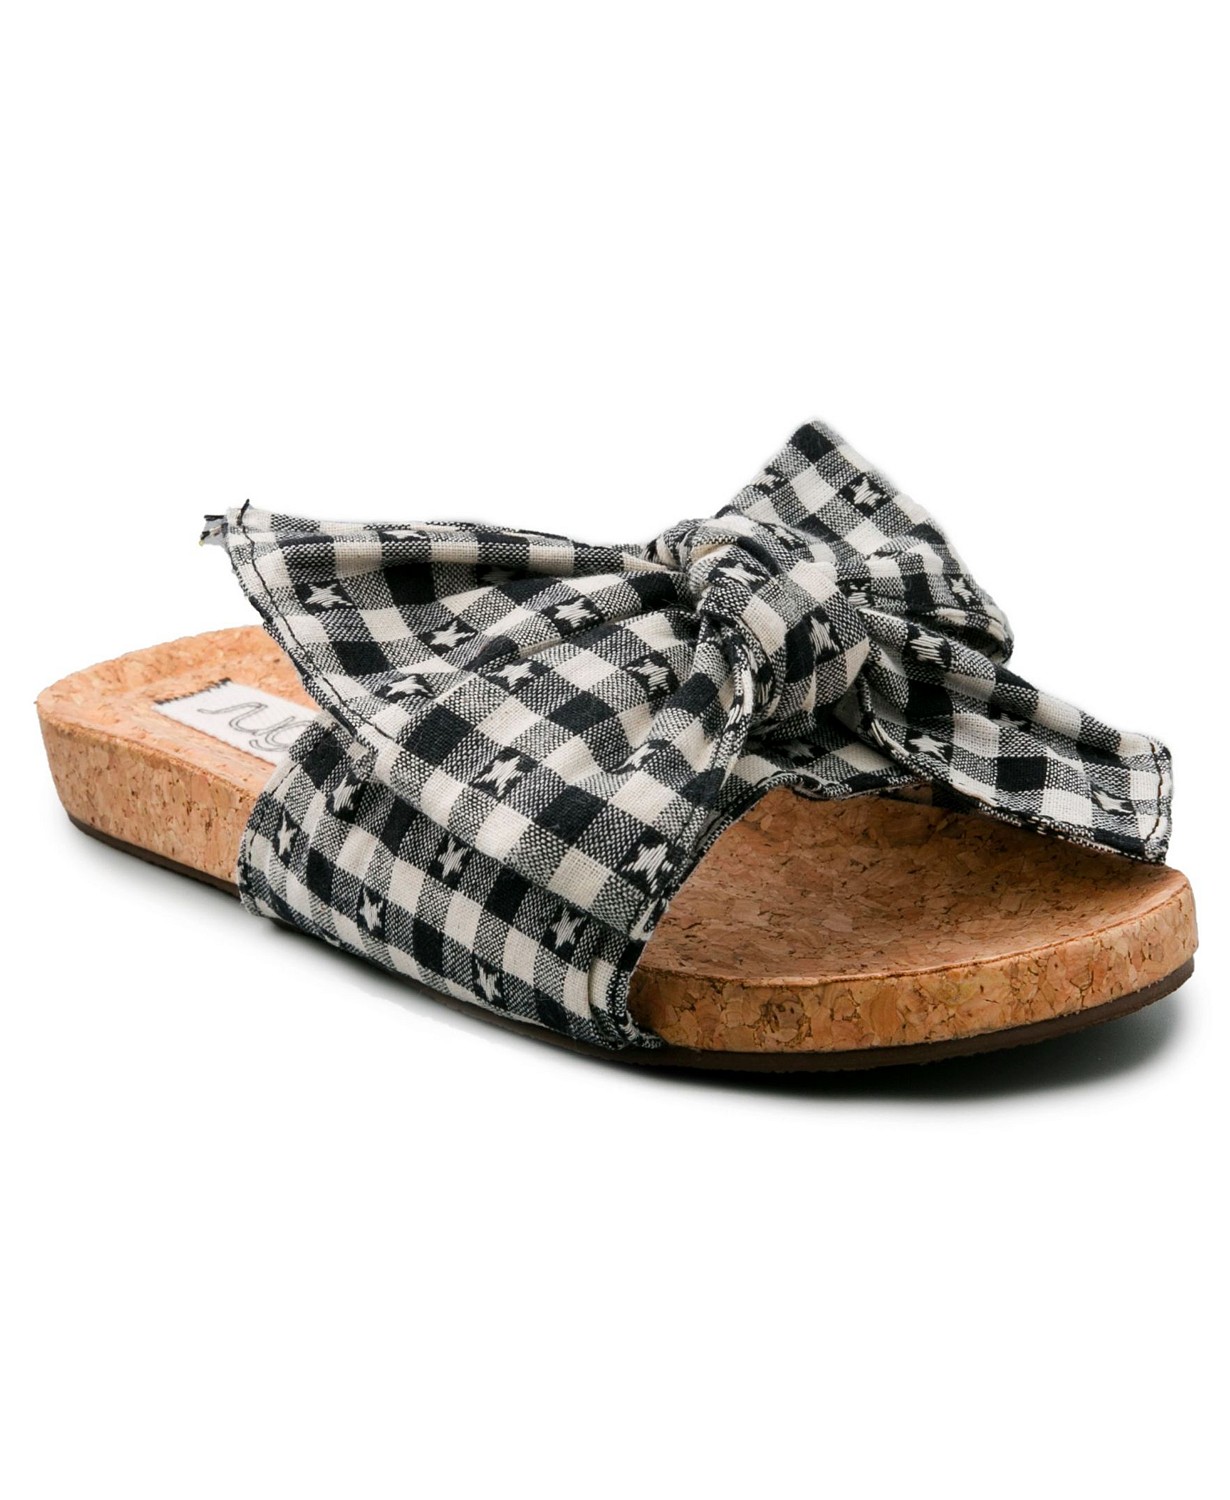 (75% OFF Deal) Women’s Xenonc Twist-Tie Slide Sandals $10.00